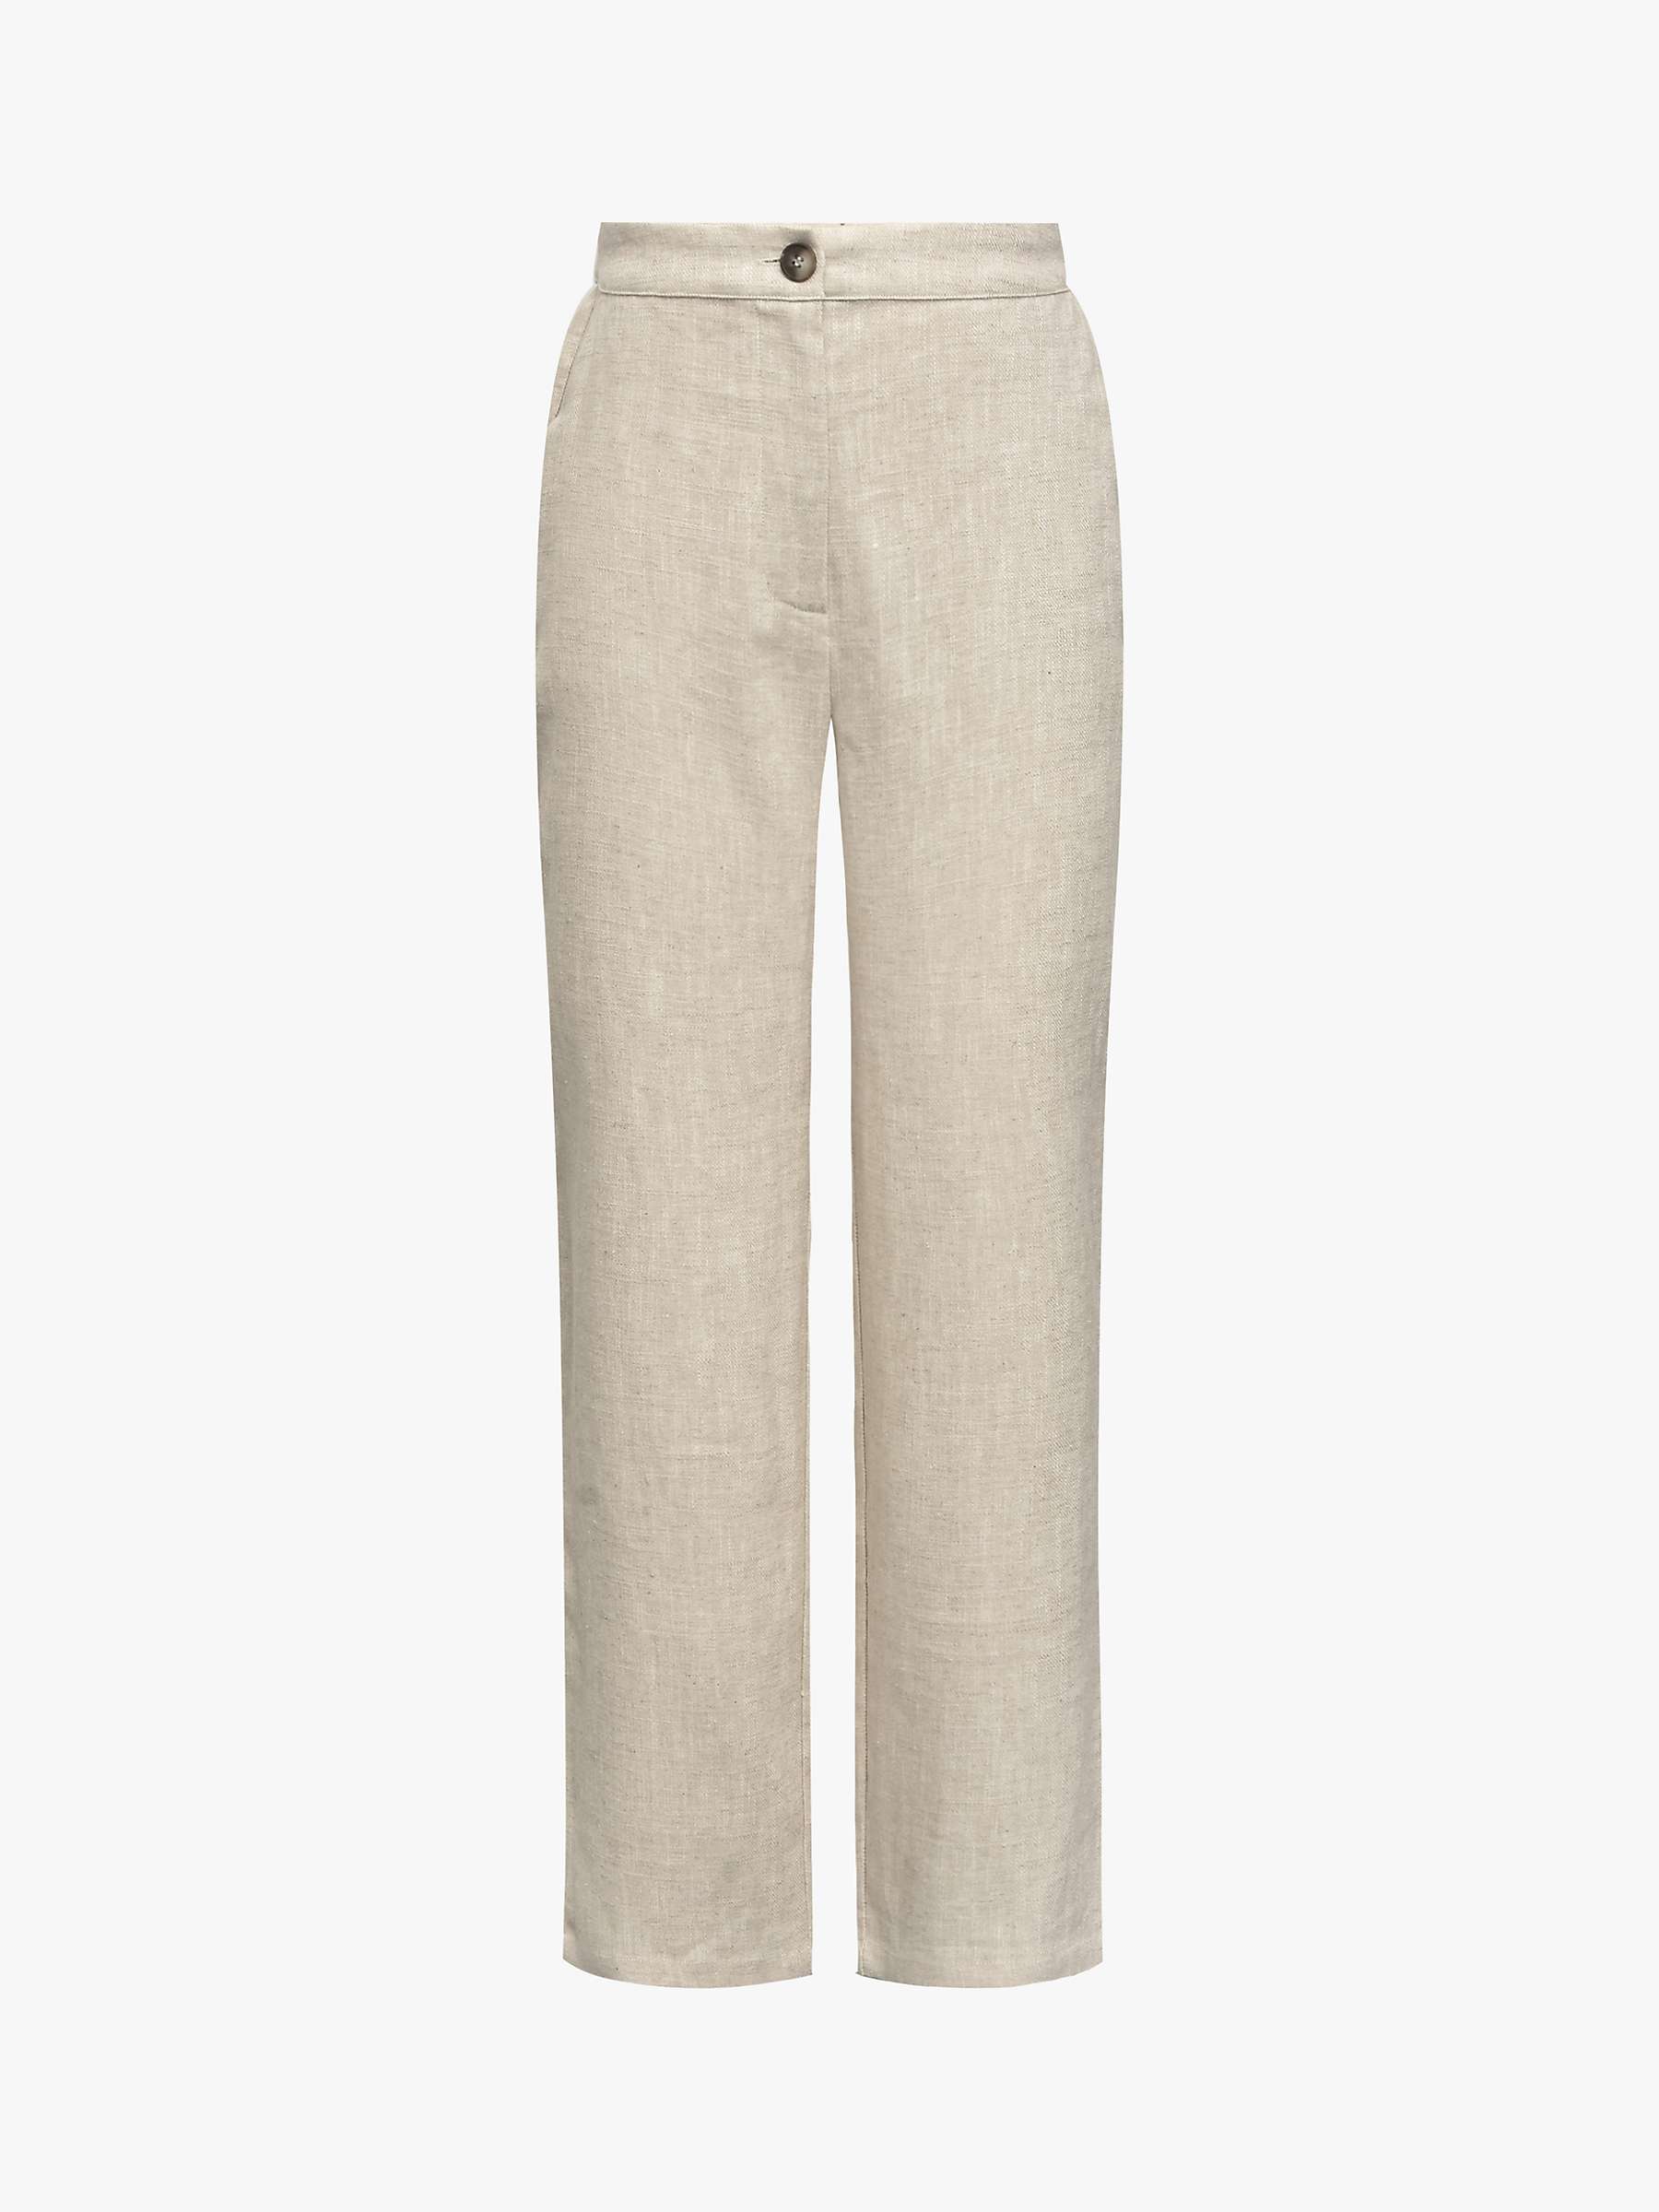 Buy A-VIEW Annali Linen Blend Straigh Leg Trousers, Light Sand Online at johnlewis.com